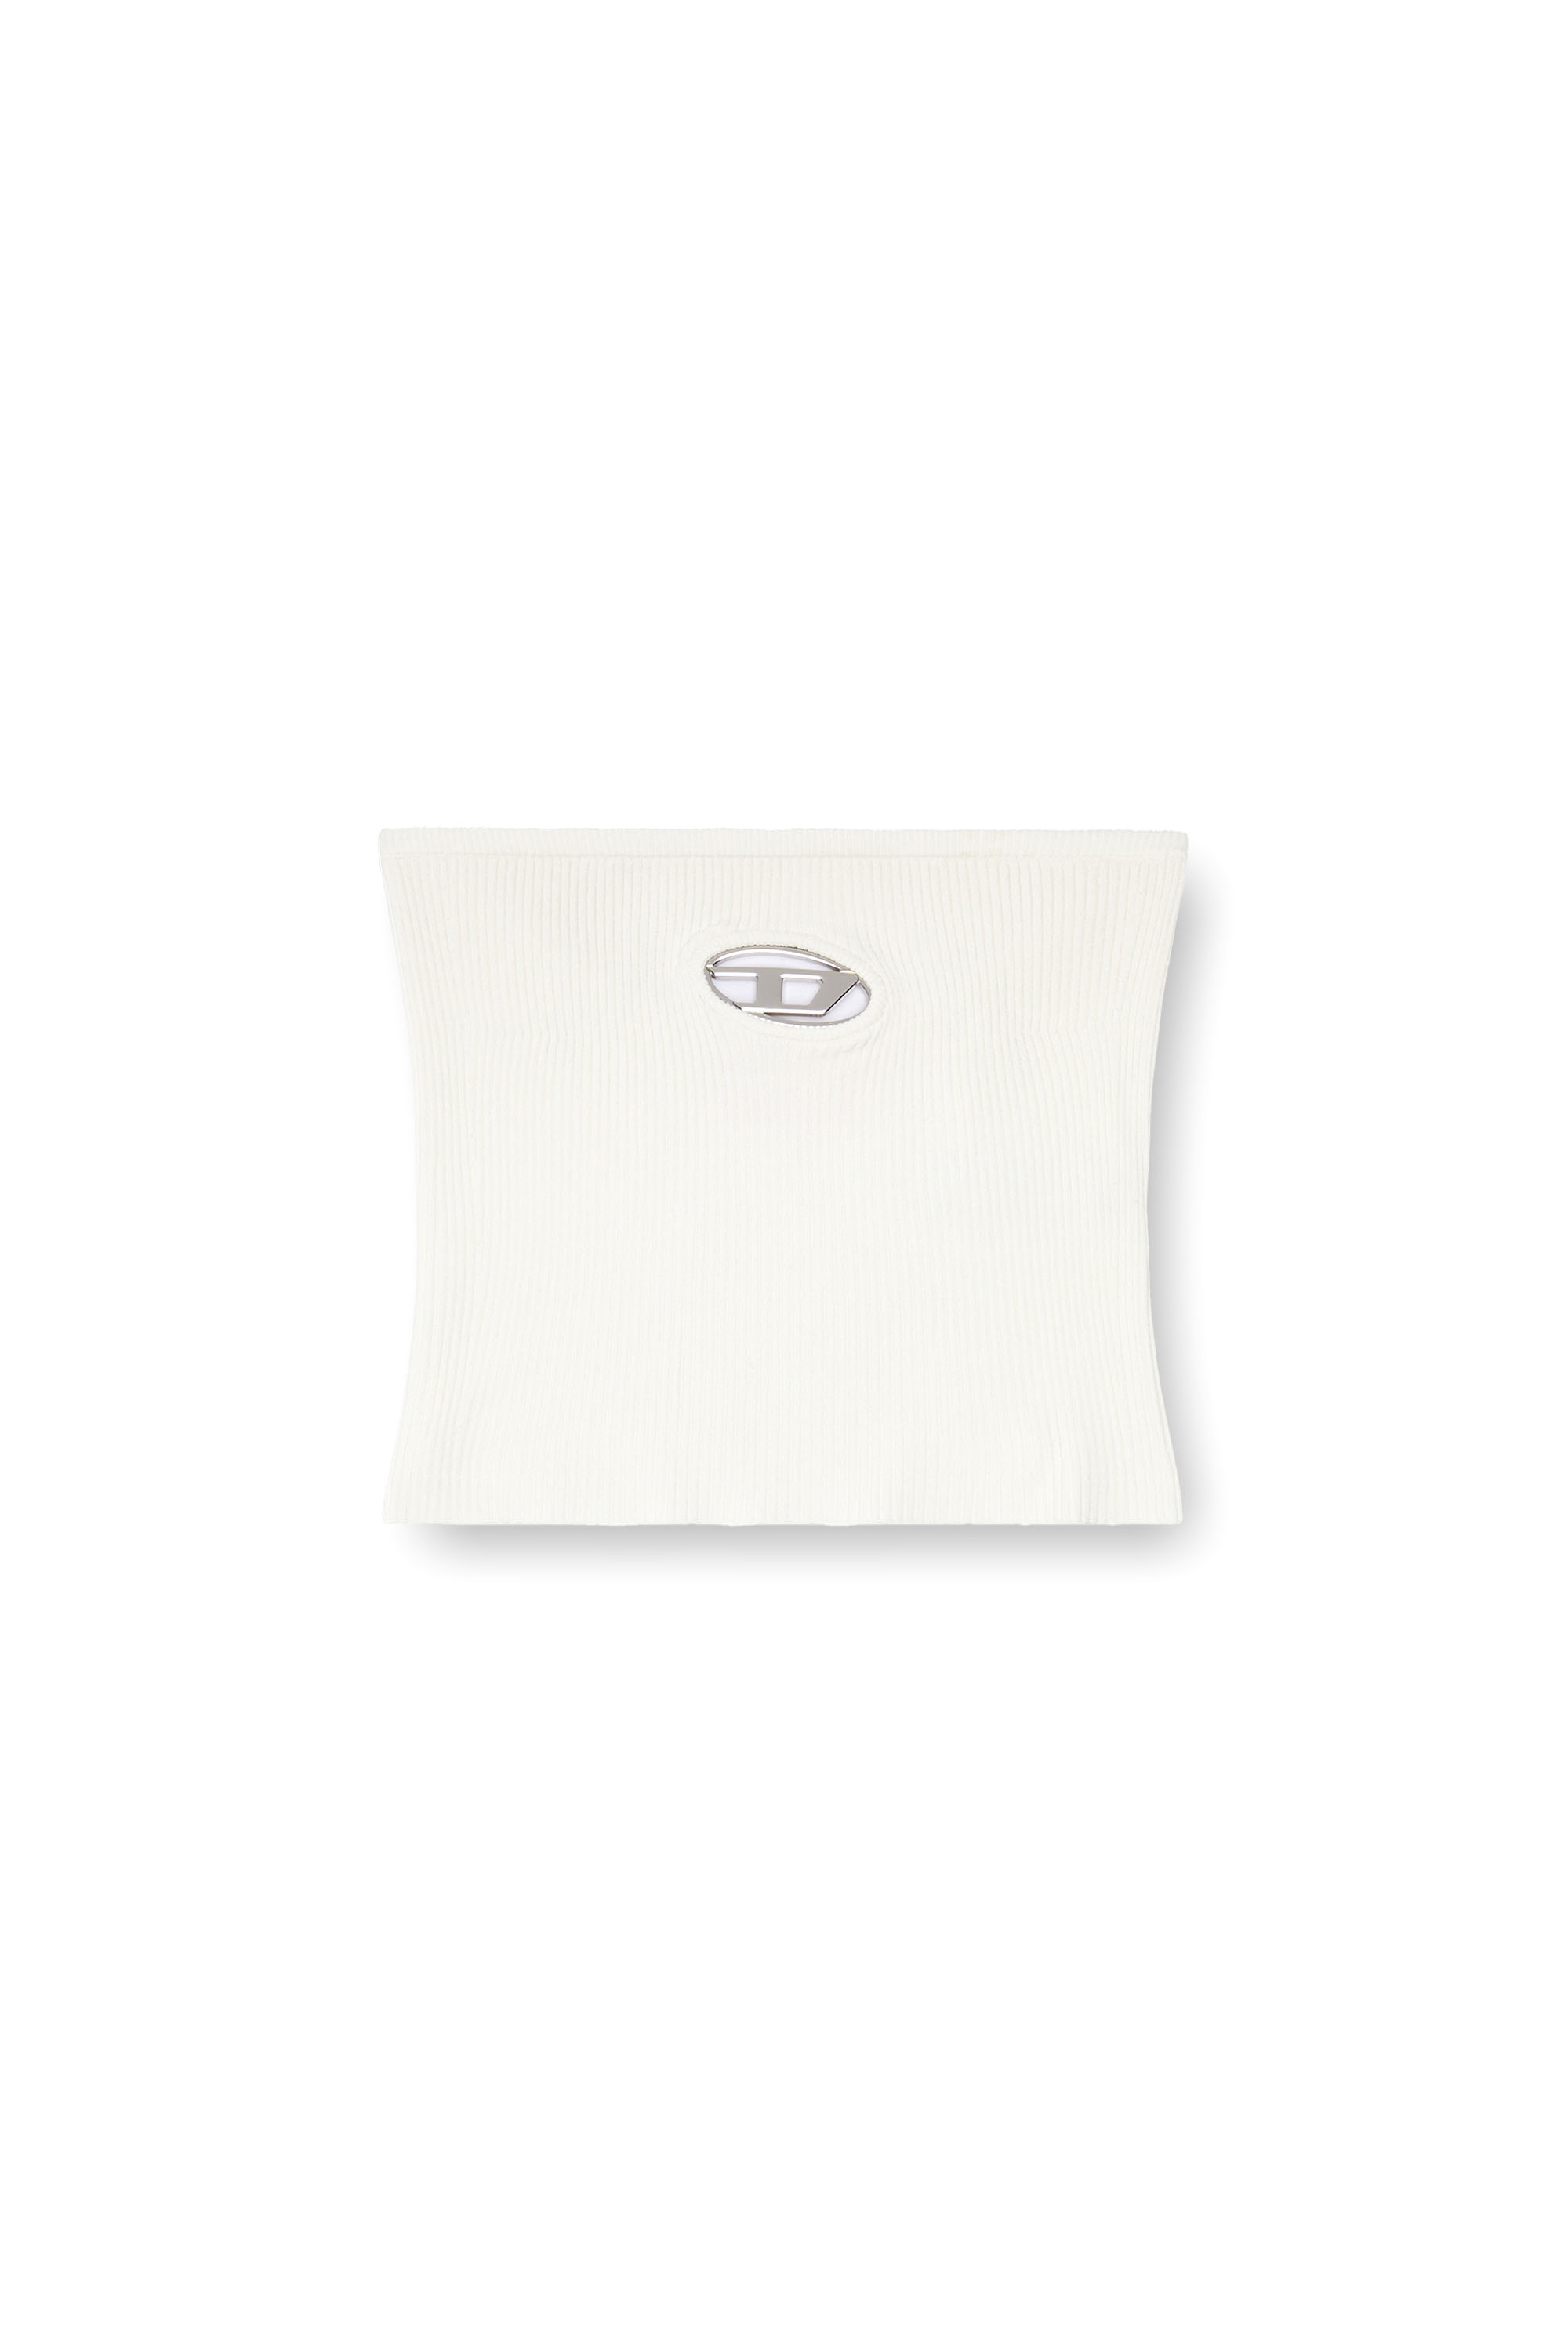 Diesel - M-CLARKSVILLEX, Donna Top a fascia con logo in metallo in Bianco - Image 3